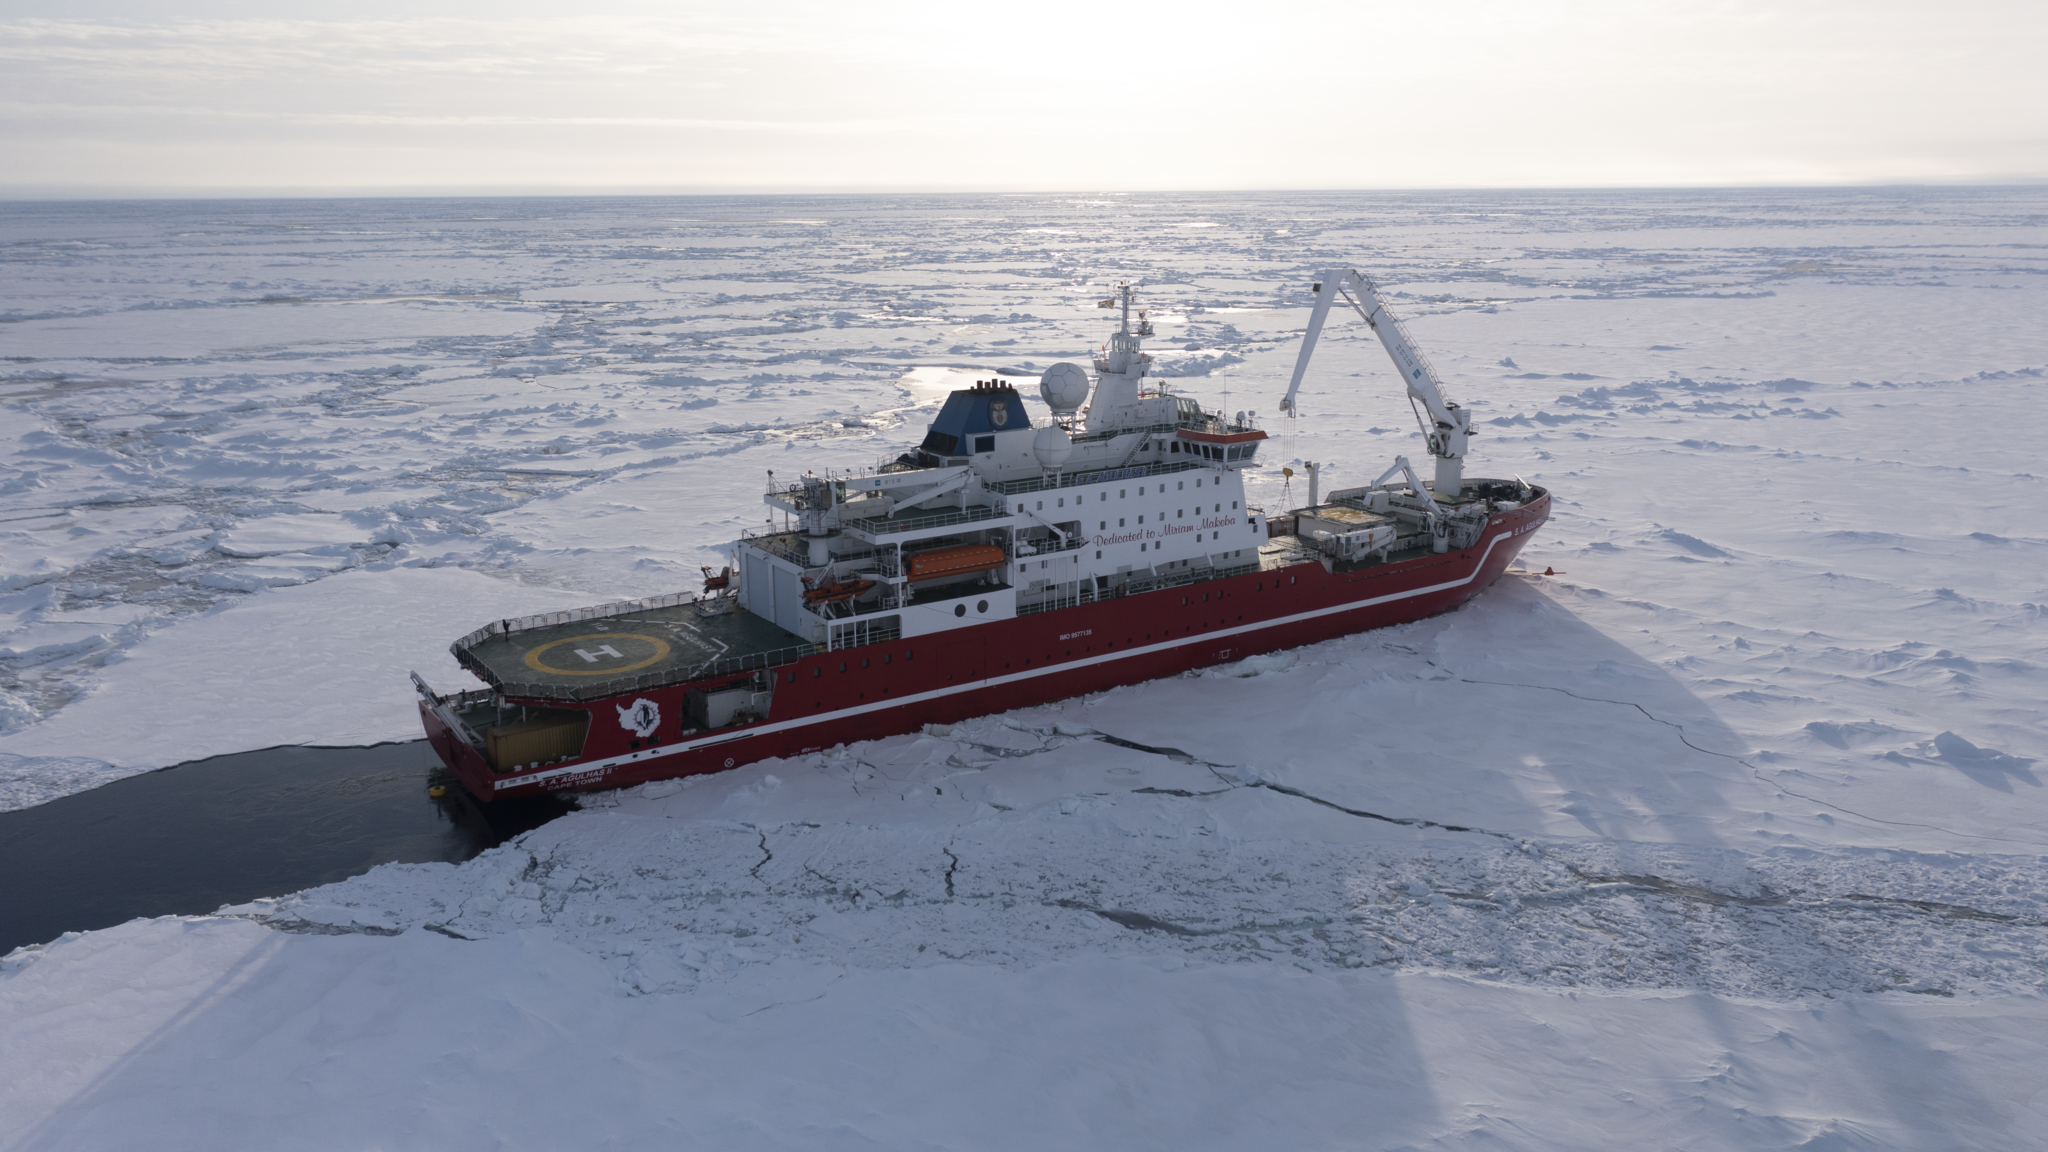 The polar research ship S.A. Agulhas II.